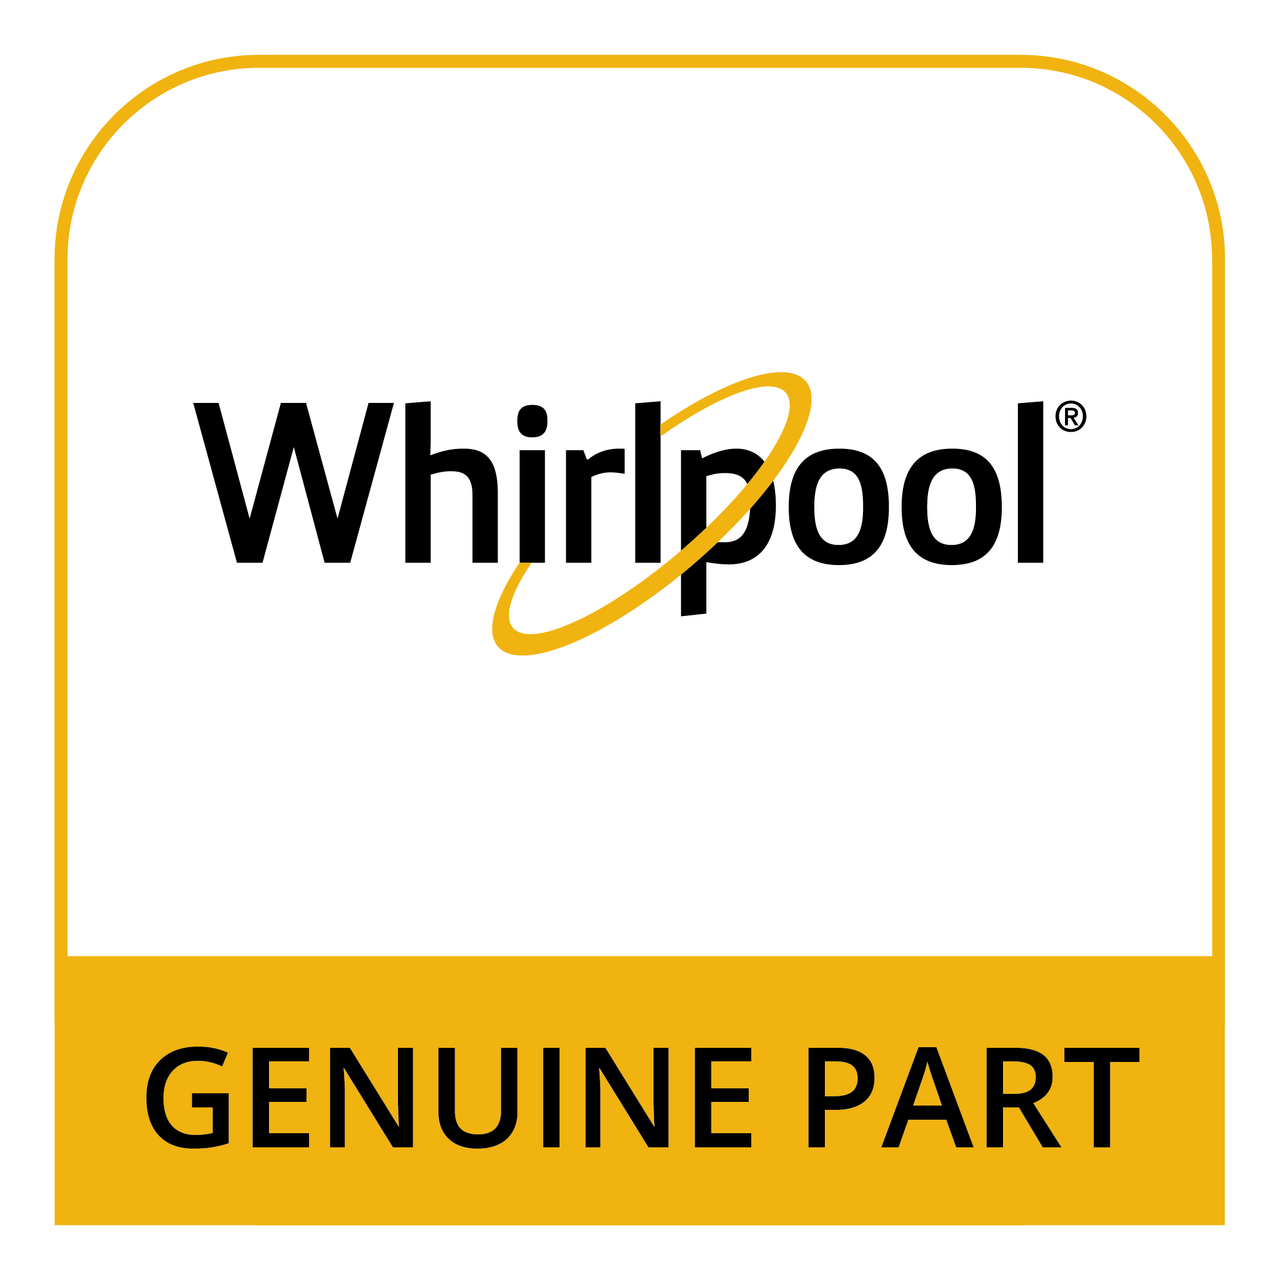 Whirlpool WP23748 - RING- RETA   *NON-WISE* - Genuine Part